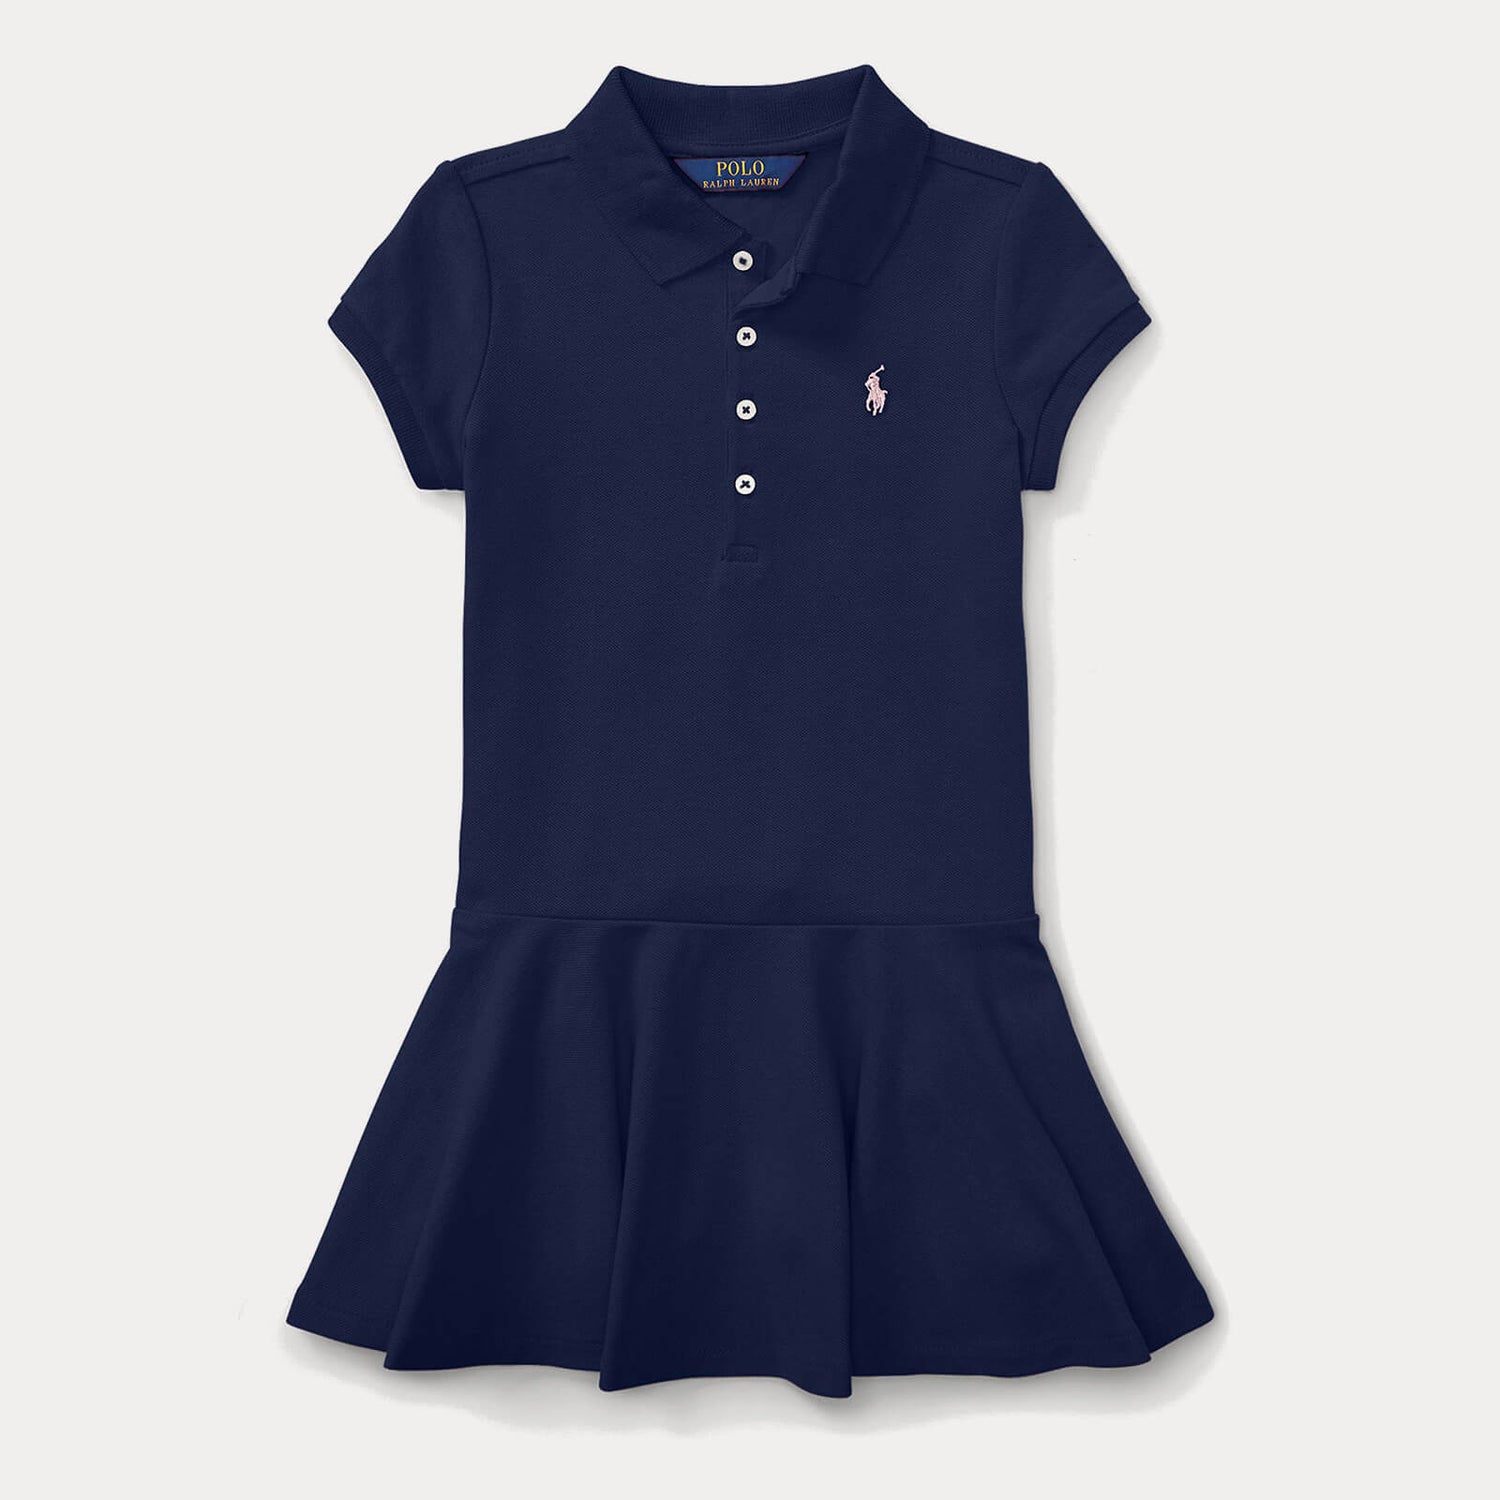 Ralph Lauren Girls Polo Dress - French Navy - 4 Years